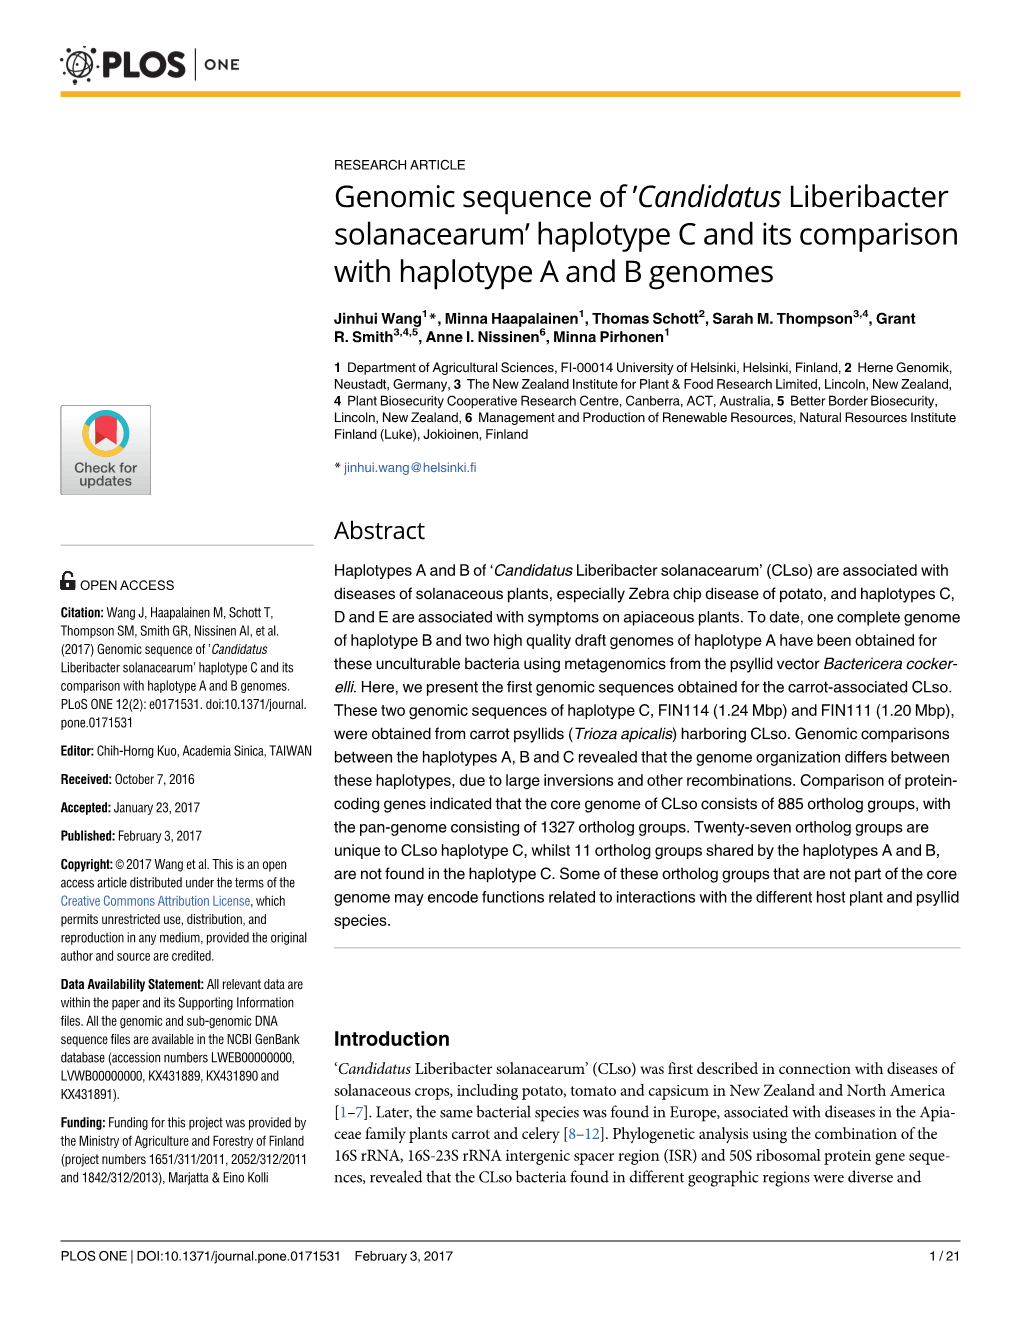 Genomic Sequence of 'Candidatus Liberibacter Solanacearum'